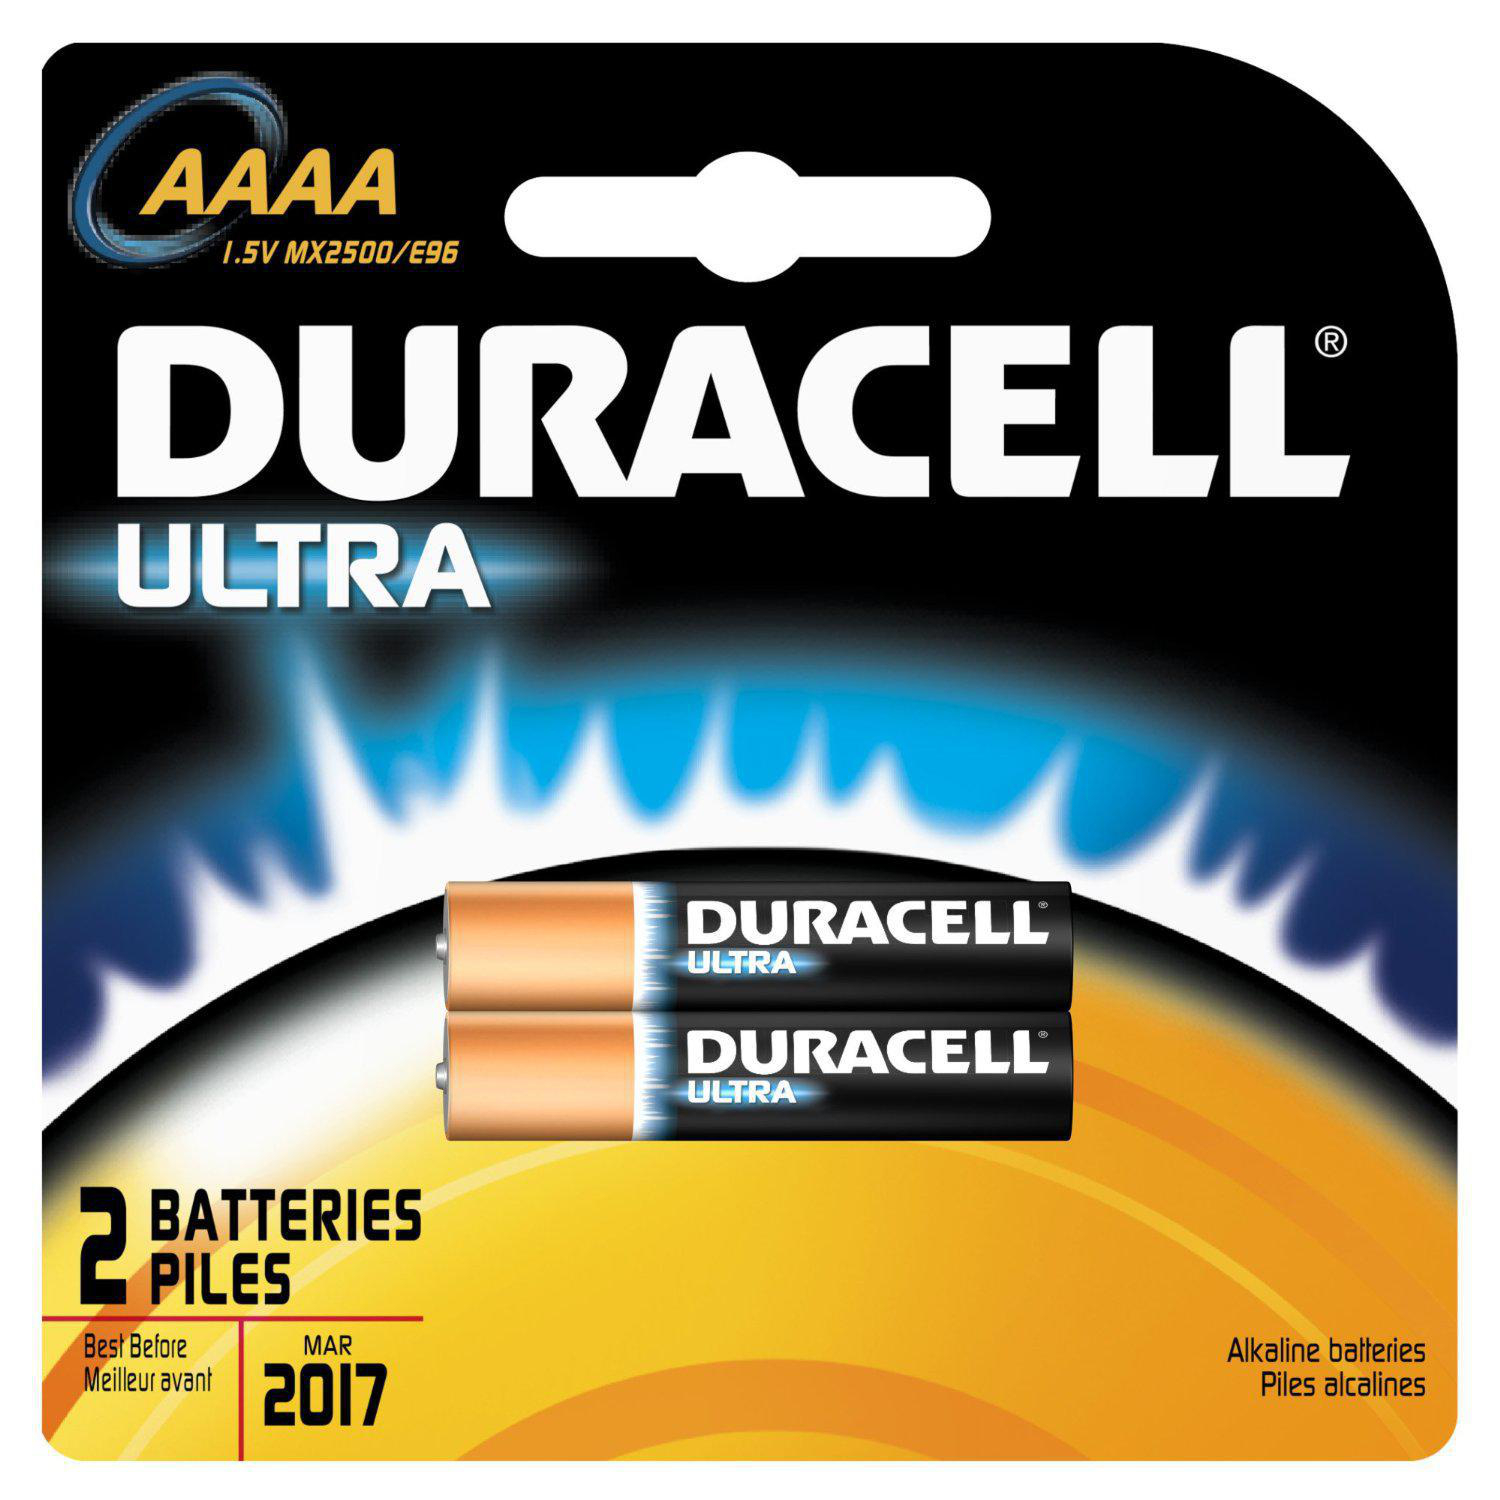 Procter & Gamble DURPC1300 Duracell Procell Alkaline General Purpose Battery 